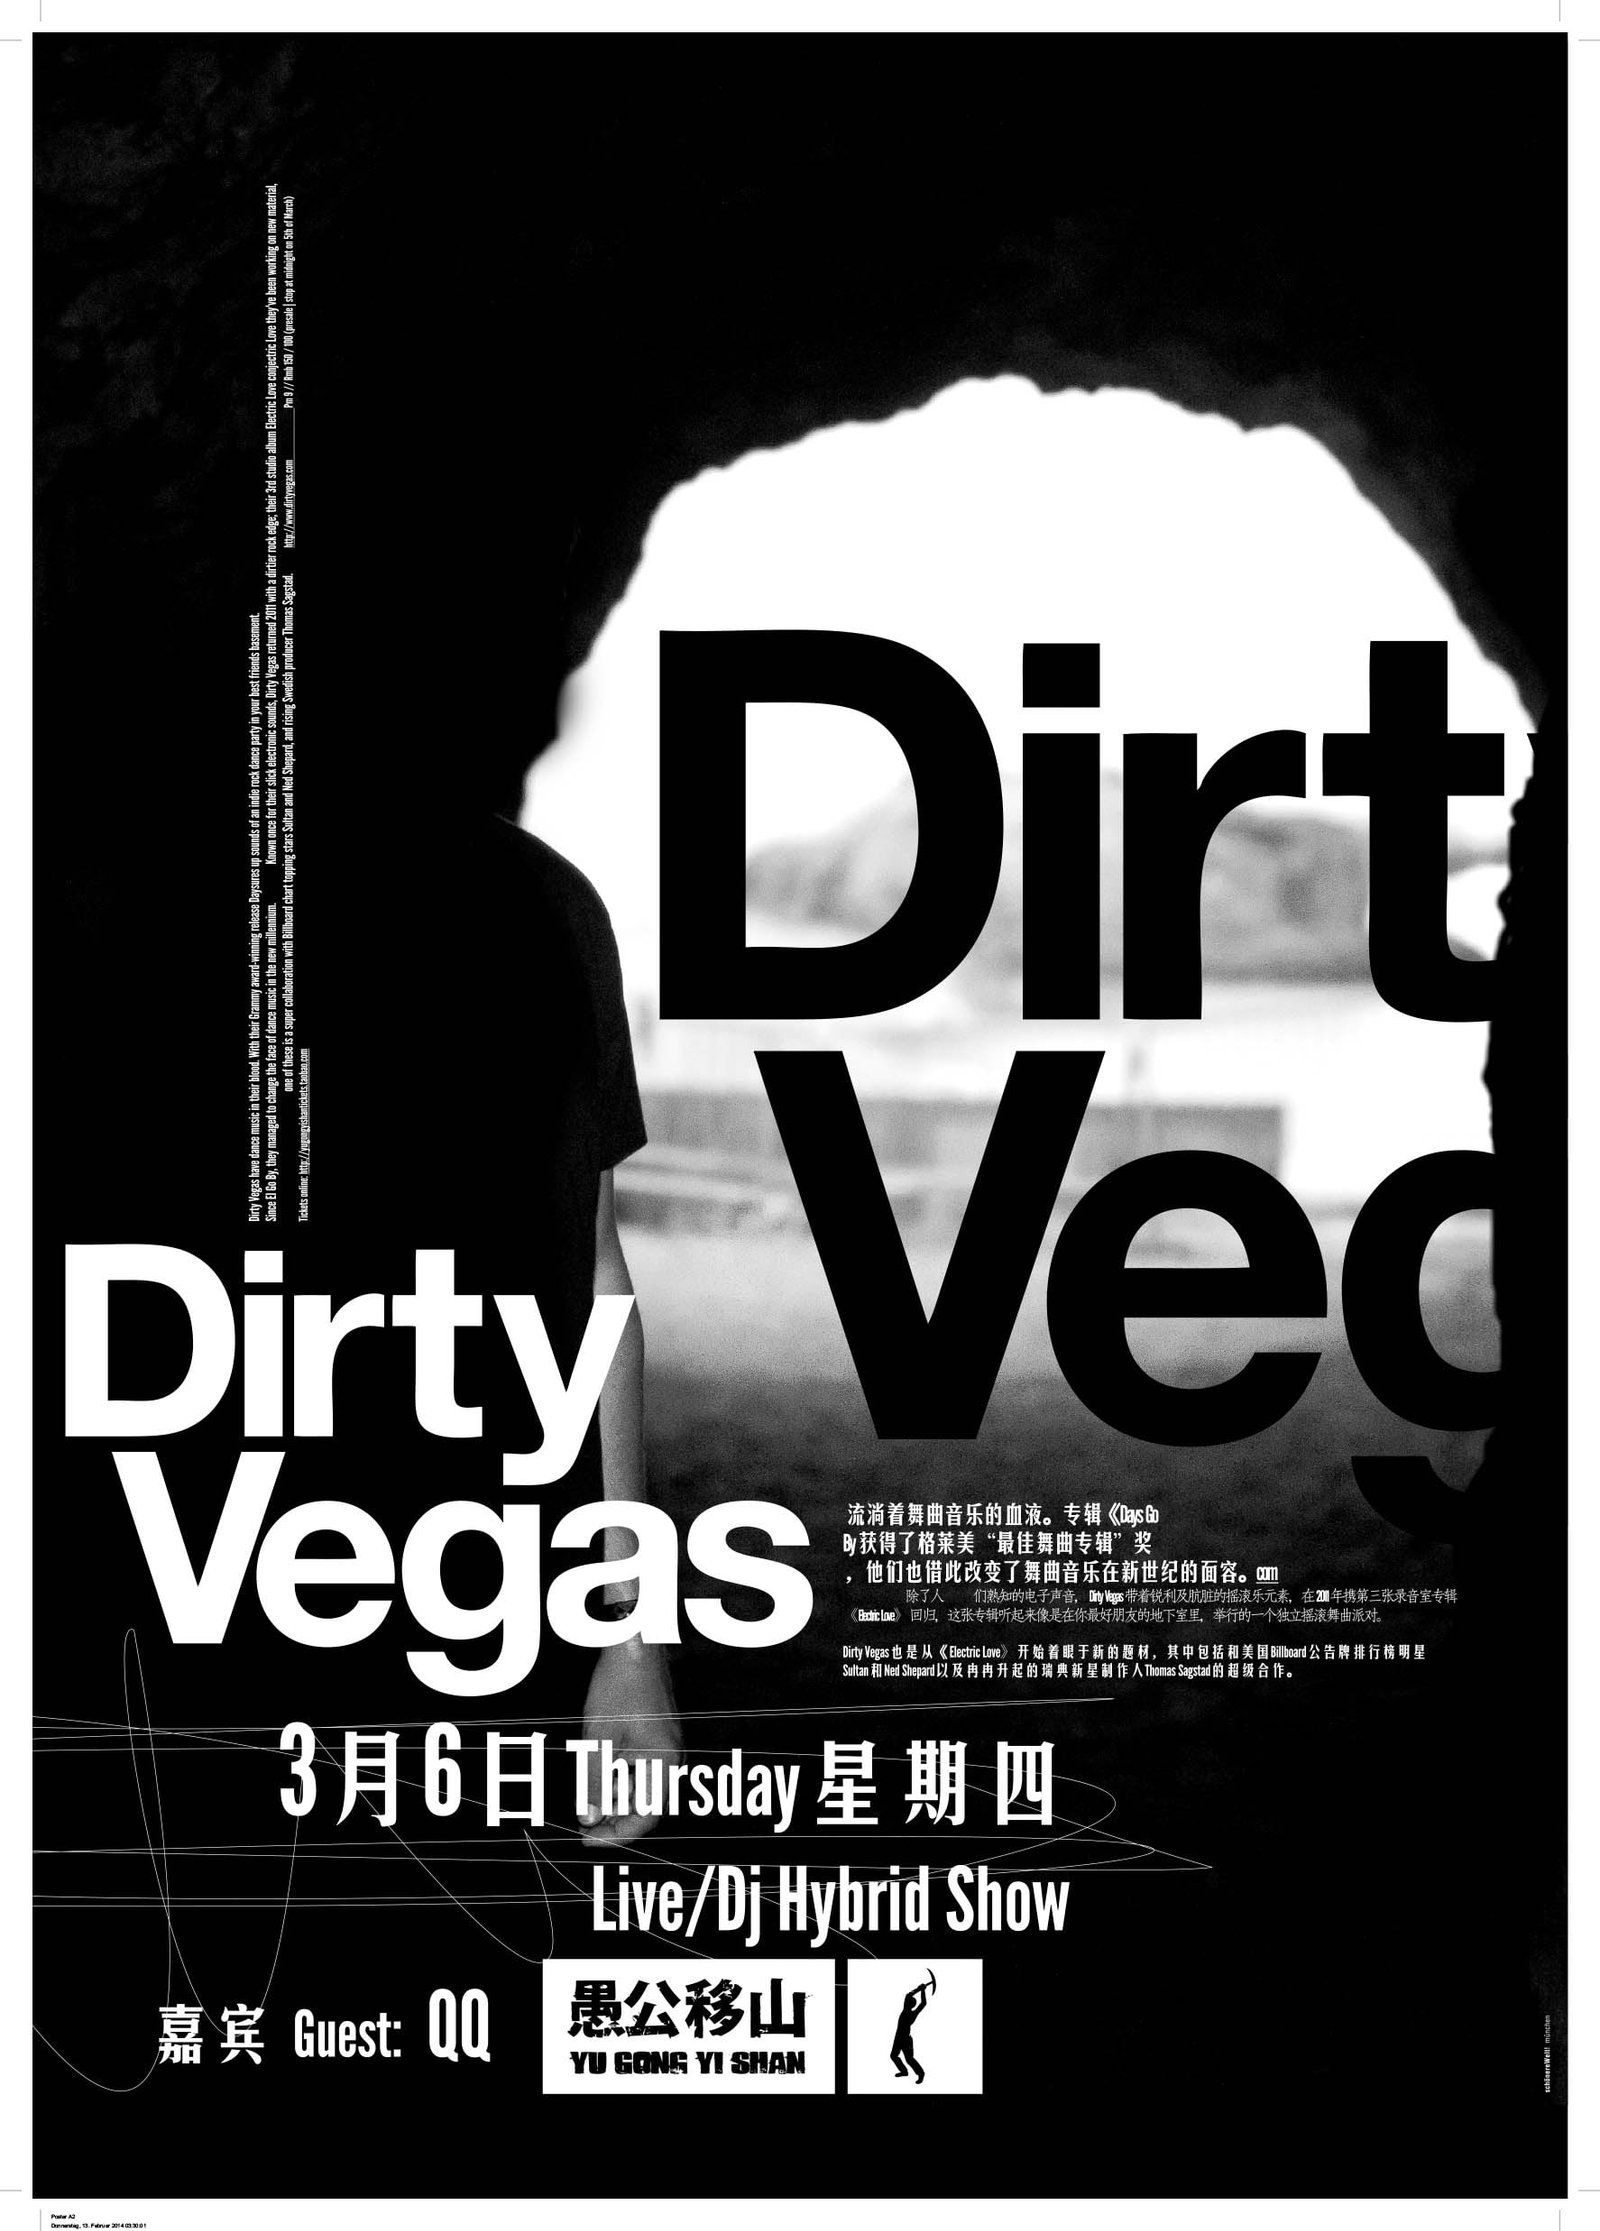 Dirty Vegas Artwork – schönereWelt!